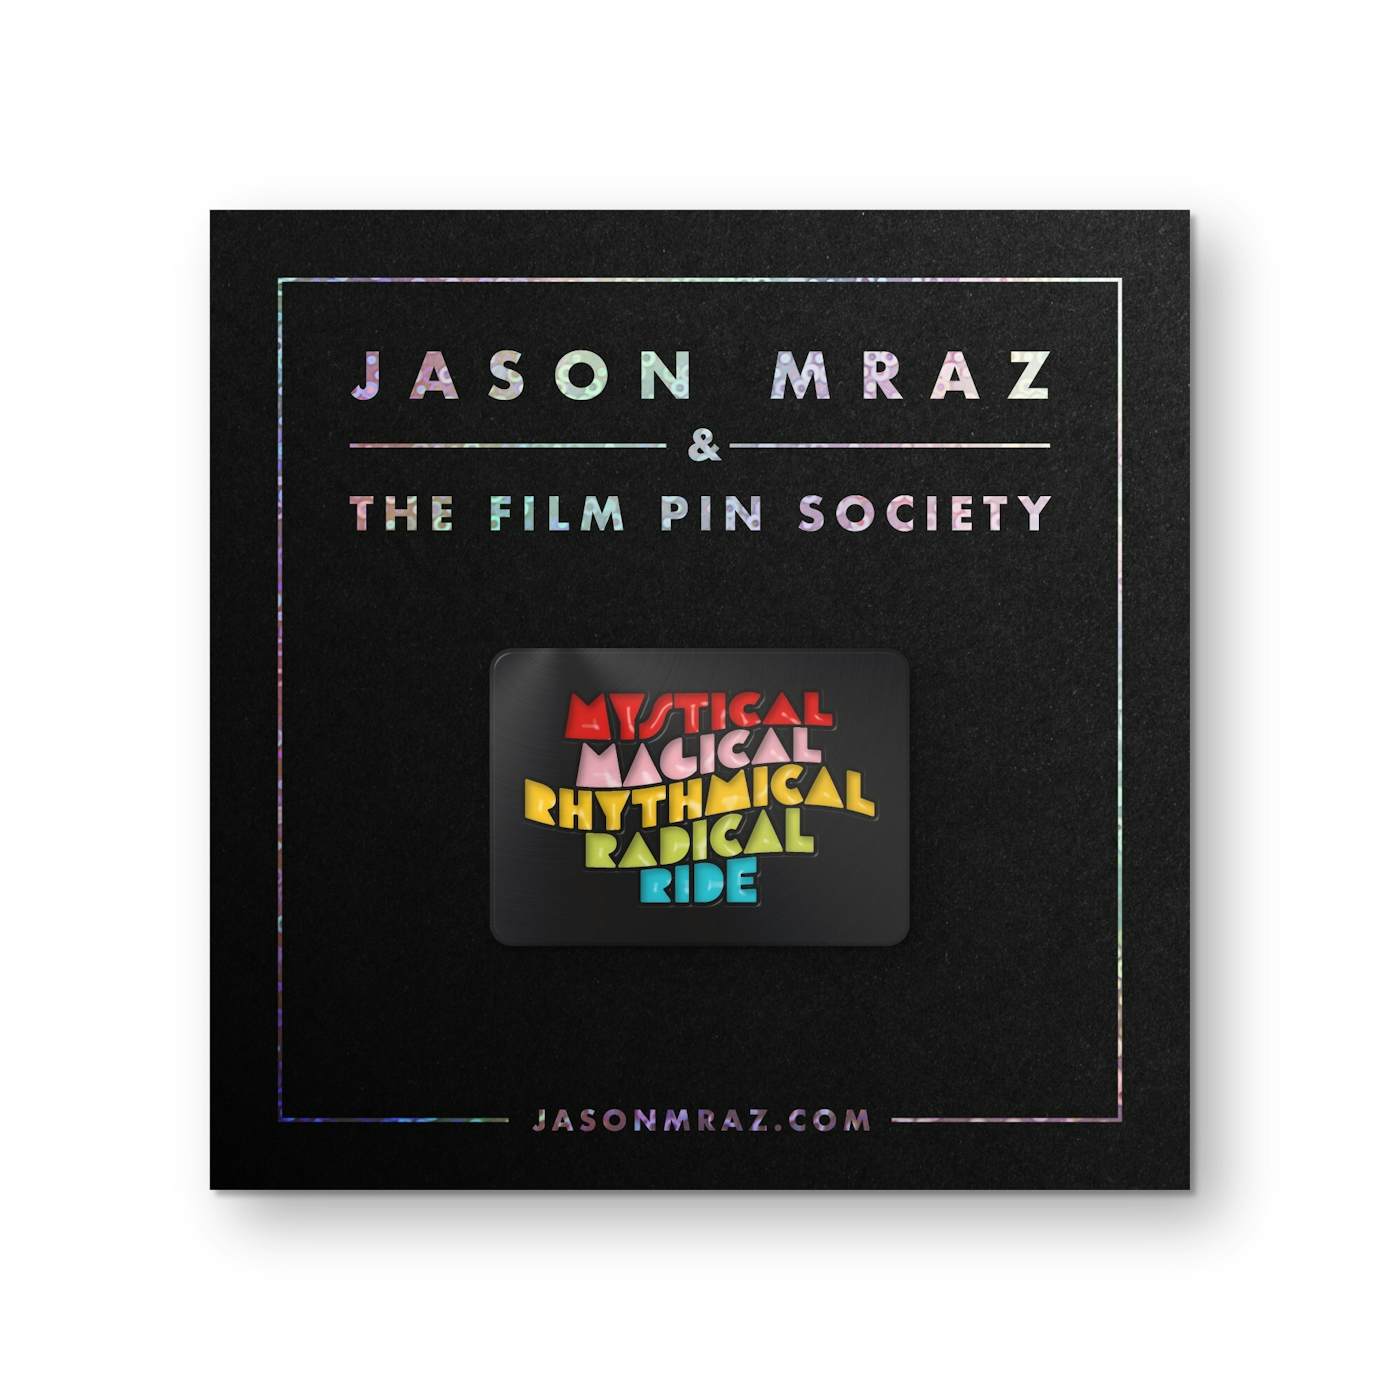 Jason Mraz MMRRR Limited Edition Enamel Pin